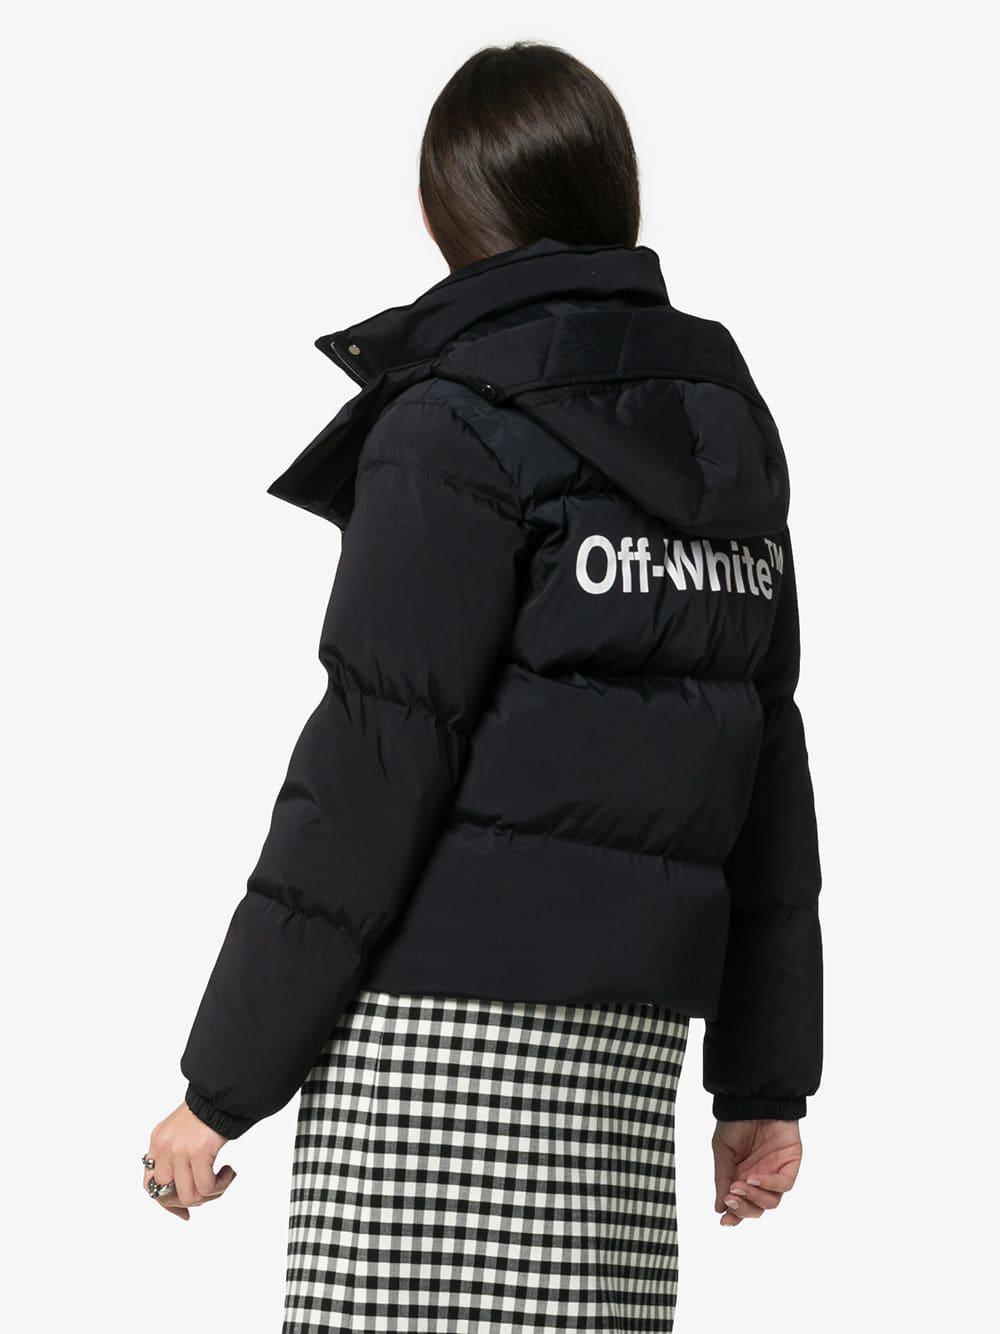 NWT OFF-WHITE C/O VIRGIL ABLOH Black Logo Print Jacket Size XS $1015